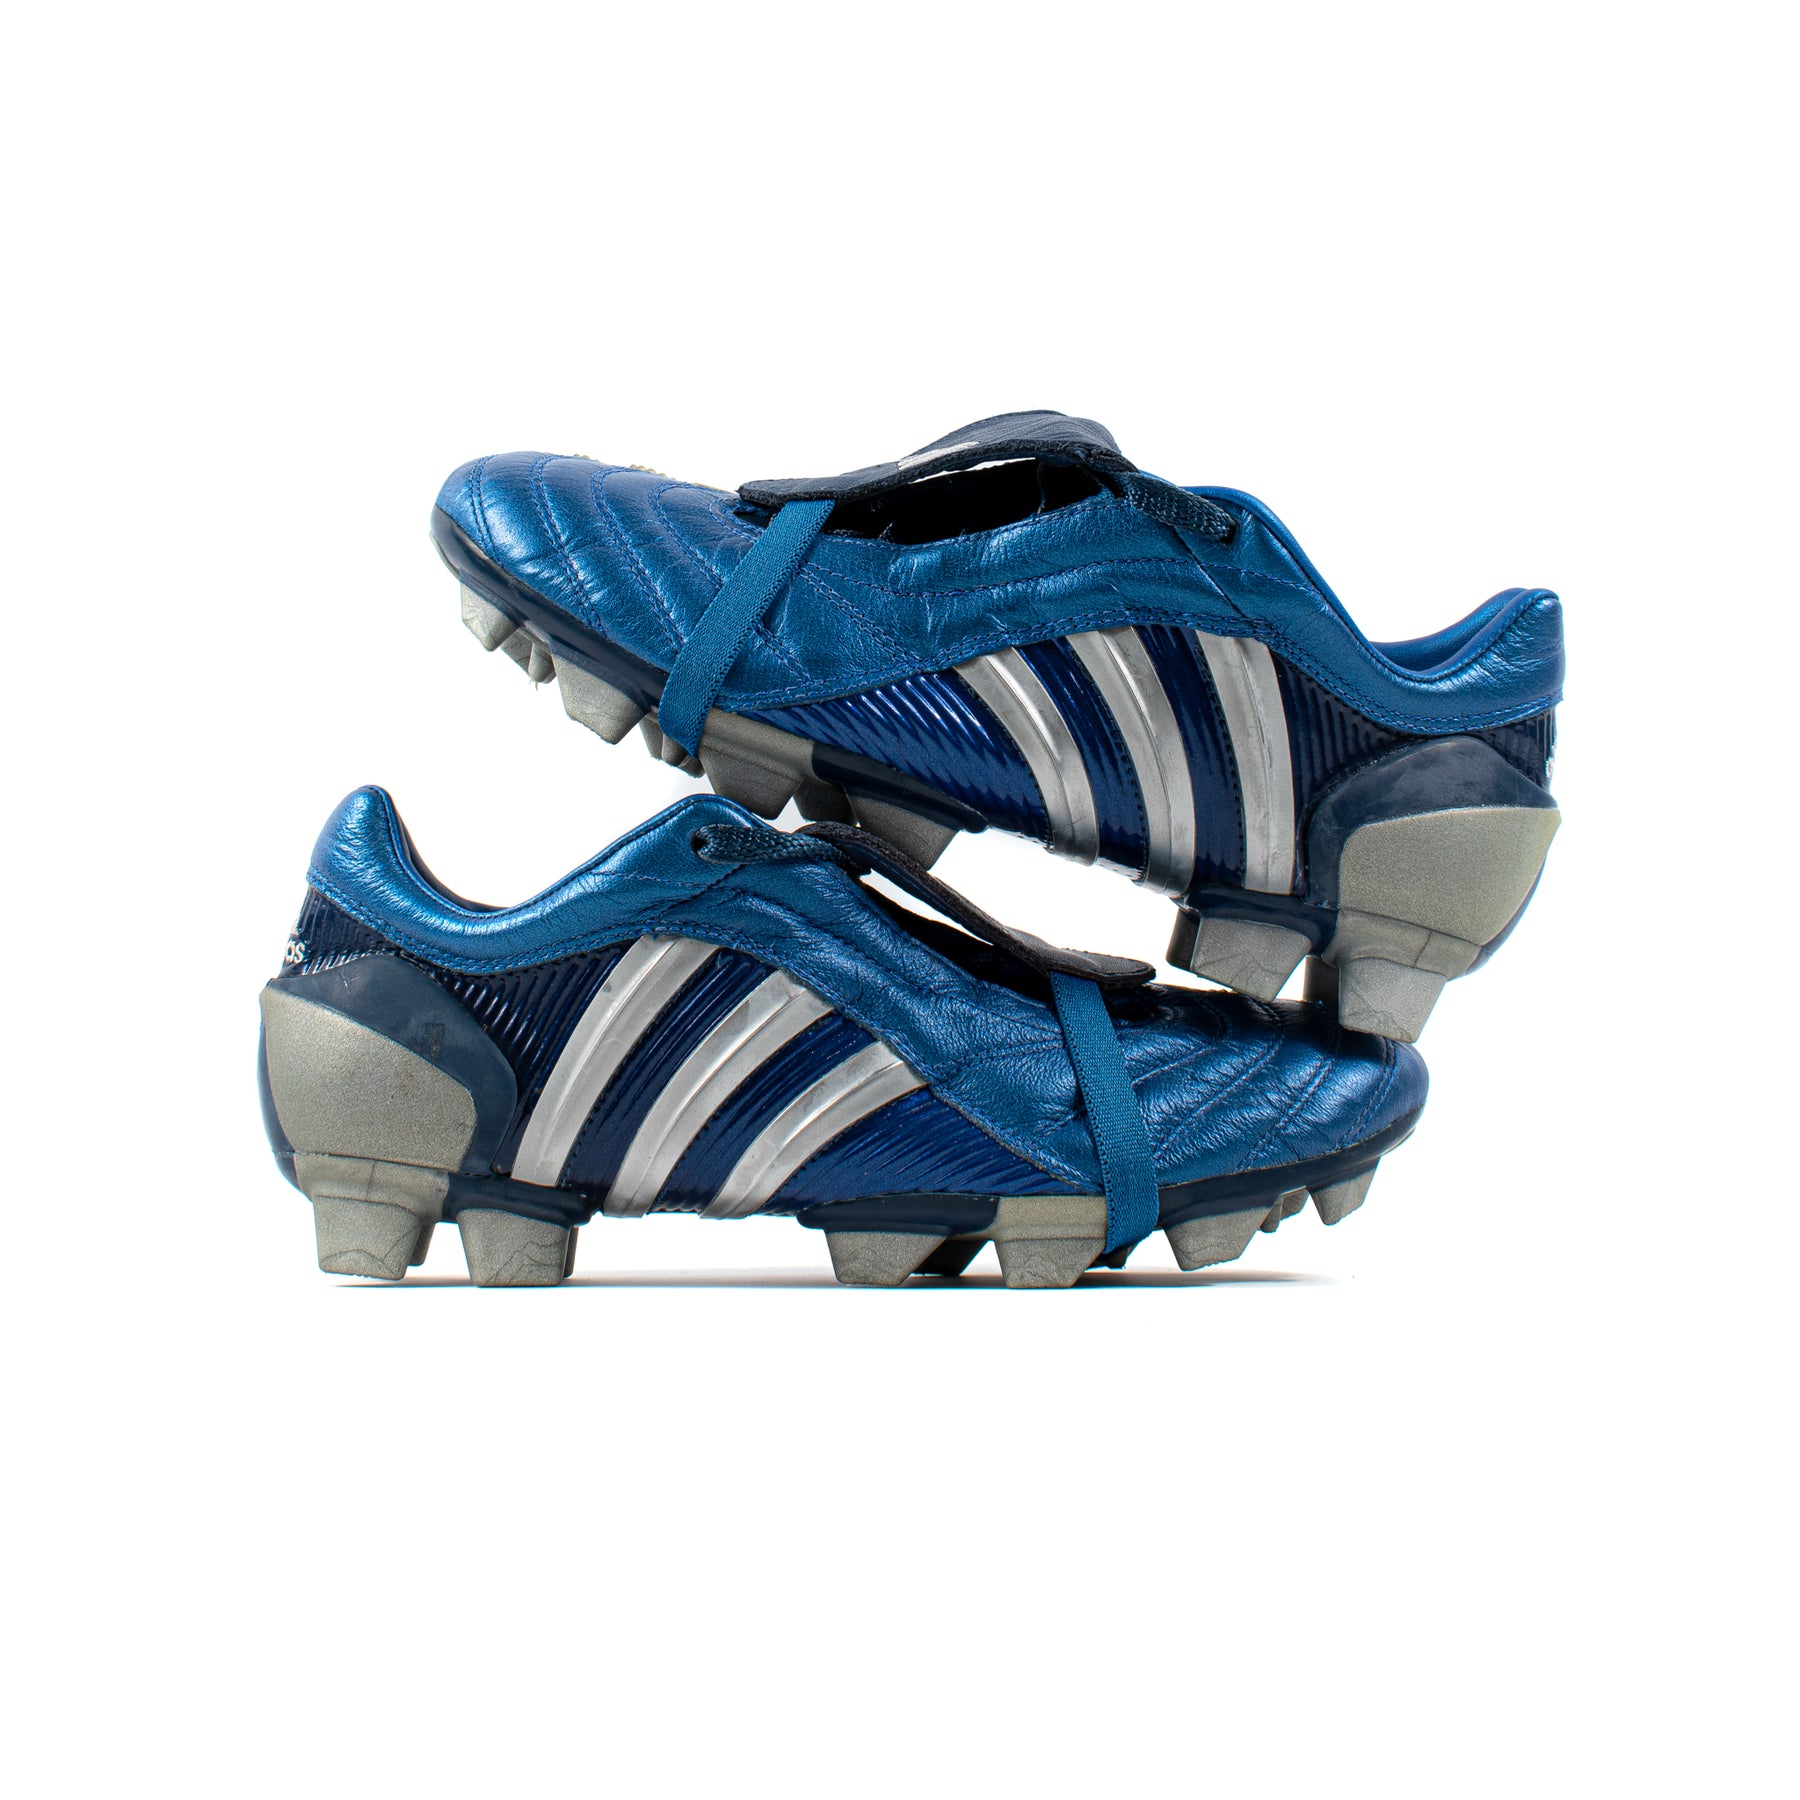 Adidas Predator Pulse Blue – Soccer Cleats